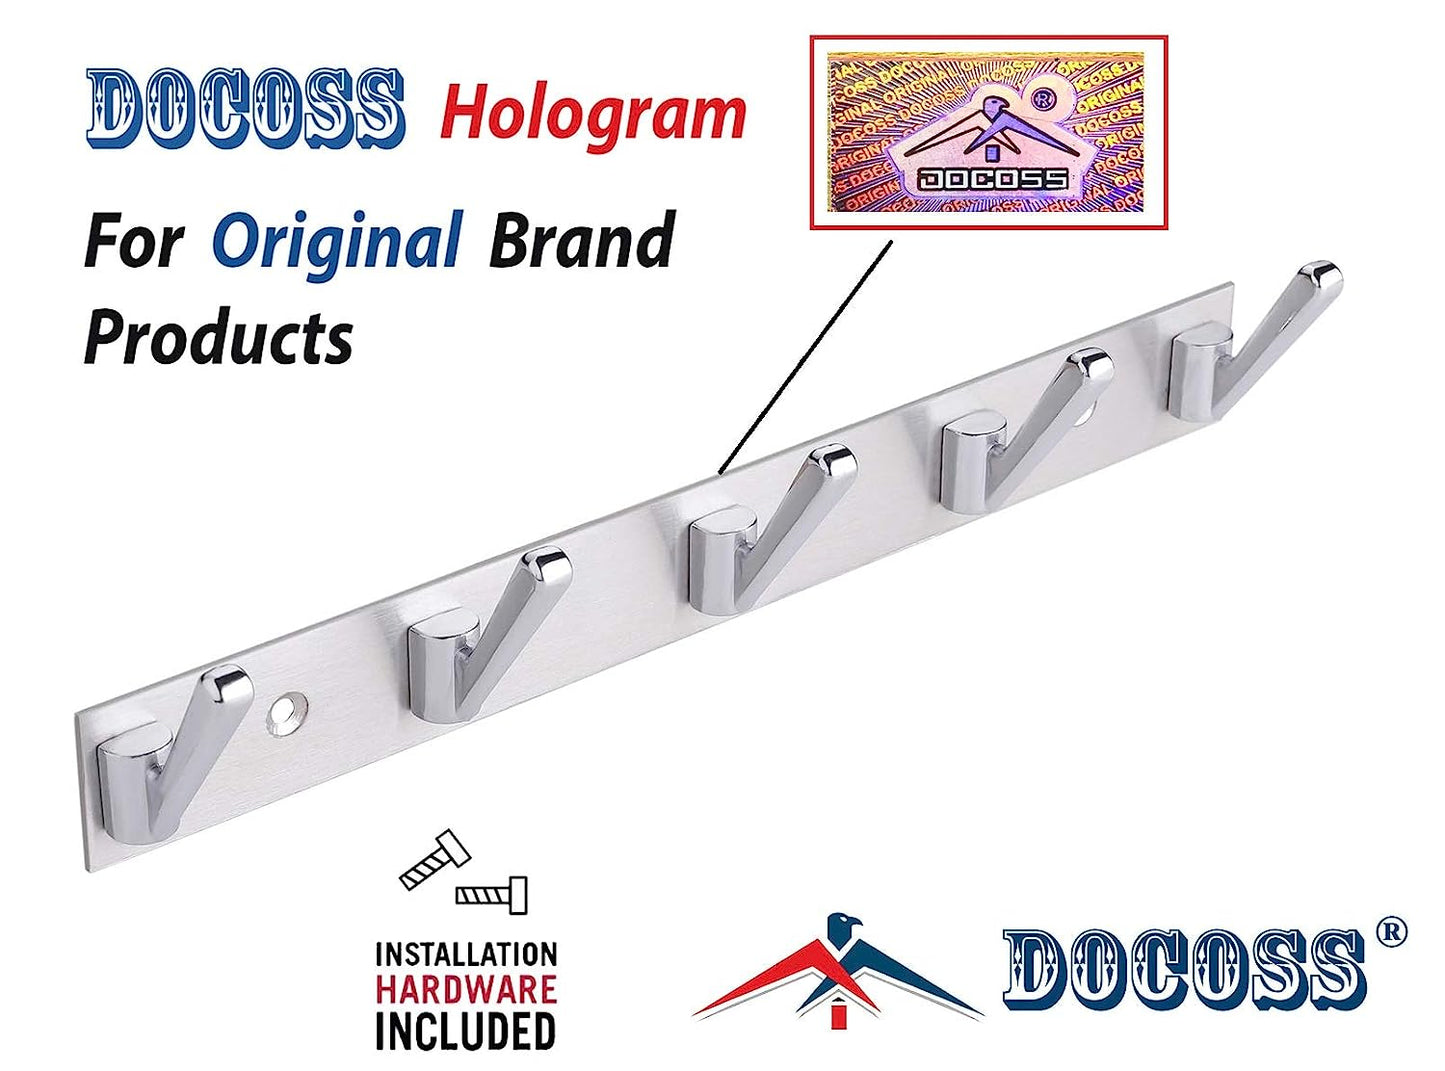 DOCOSS Deluxe Stainless Steel Bathroom Cloth Hooks 5 Pins Hanger Door Wall Bedroom Robe Hooks Rail for Hanging Keys,Clothes,Towel Steel Hook